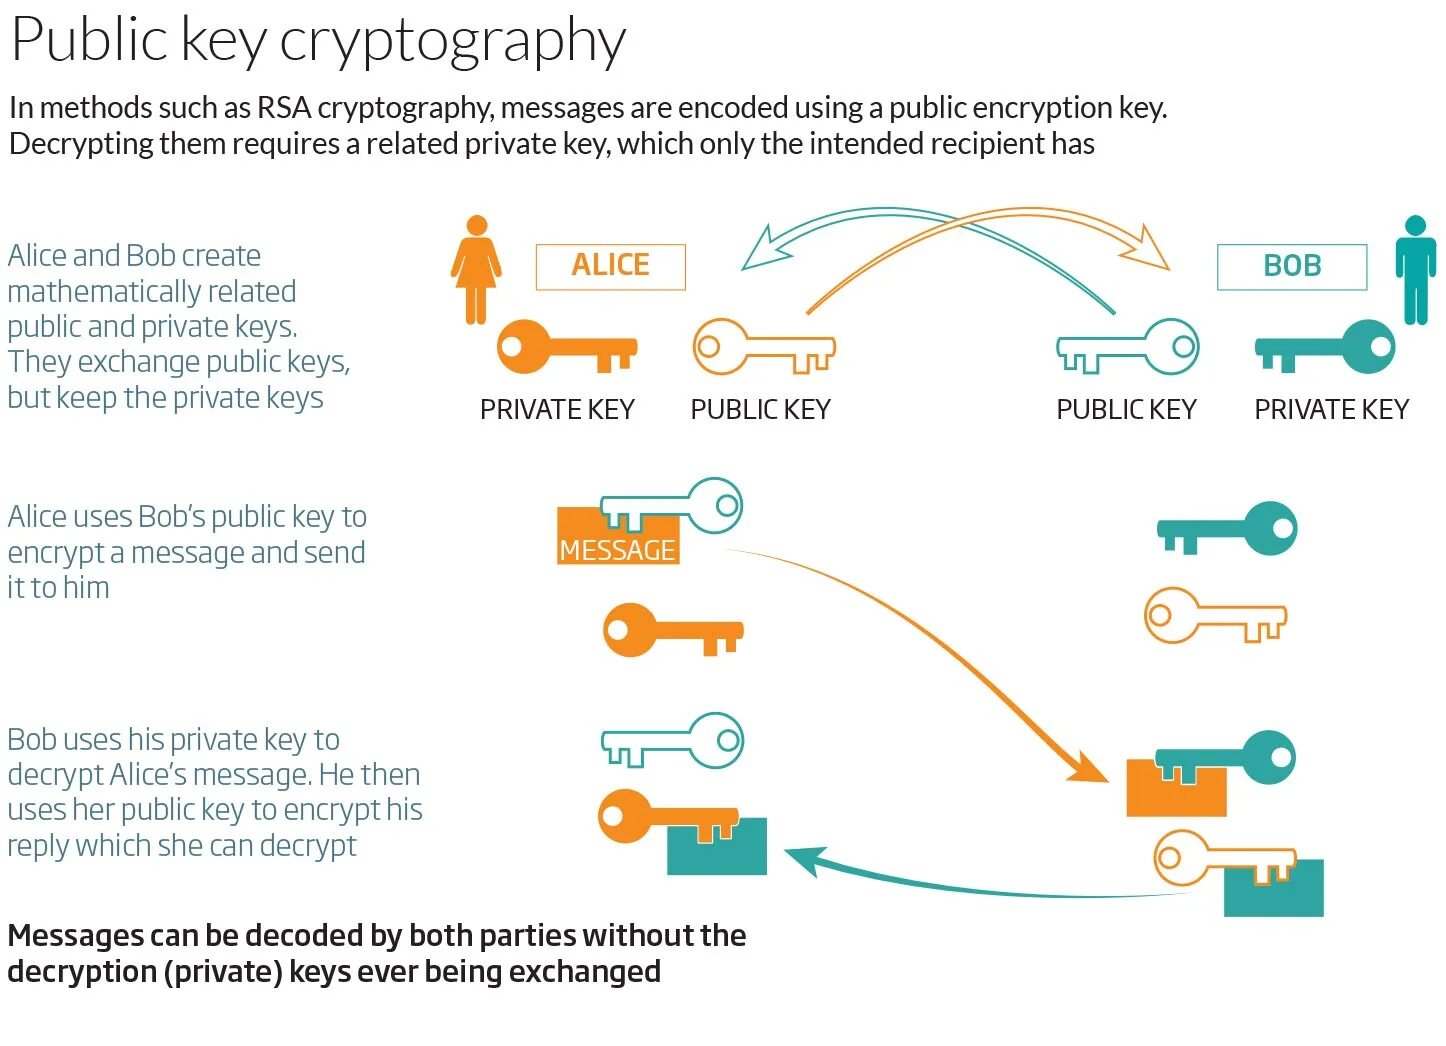 Public-Key cryptography. Криптосистема с открытым ключом. Публичный ключ биткоин. Публичный ключ и приватный ключ.